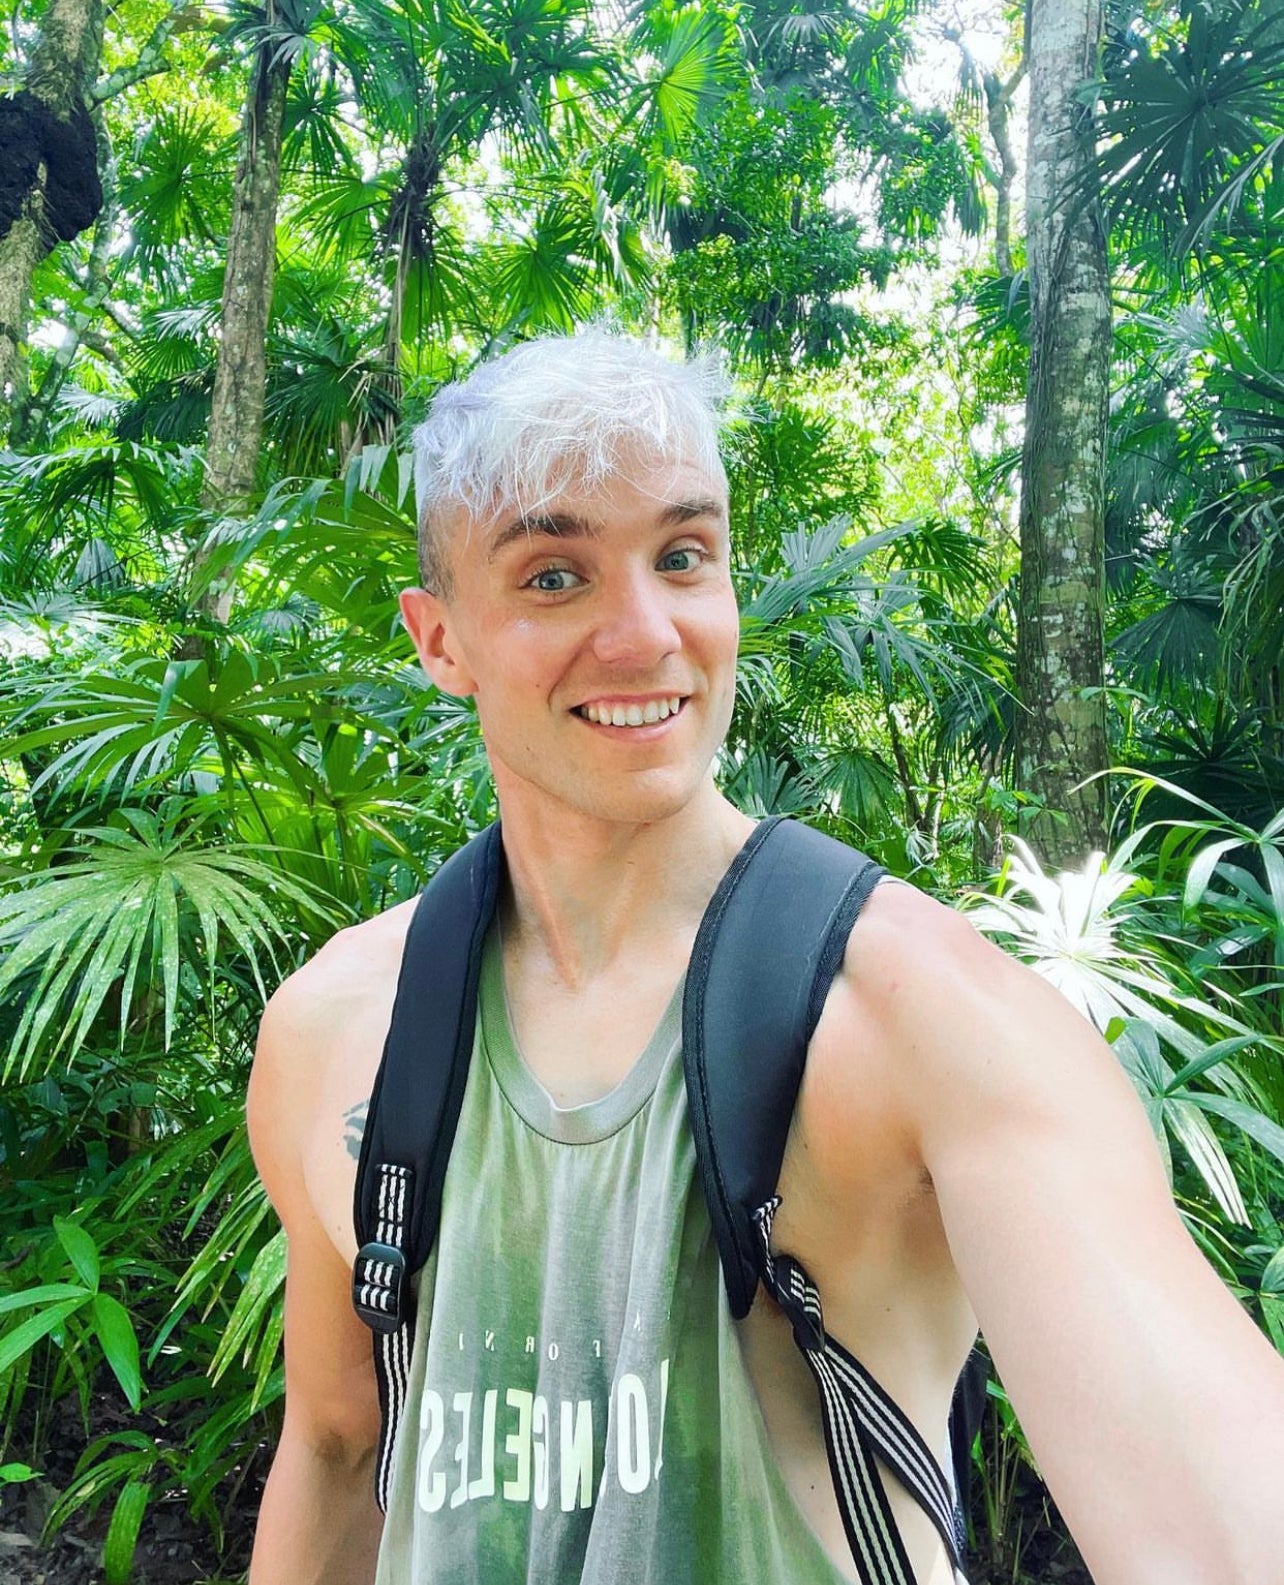 Visiting Panama’s rainforest